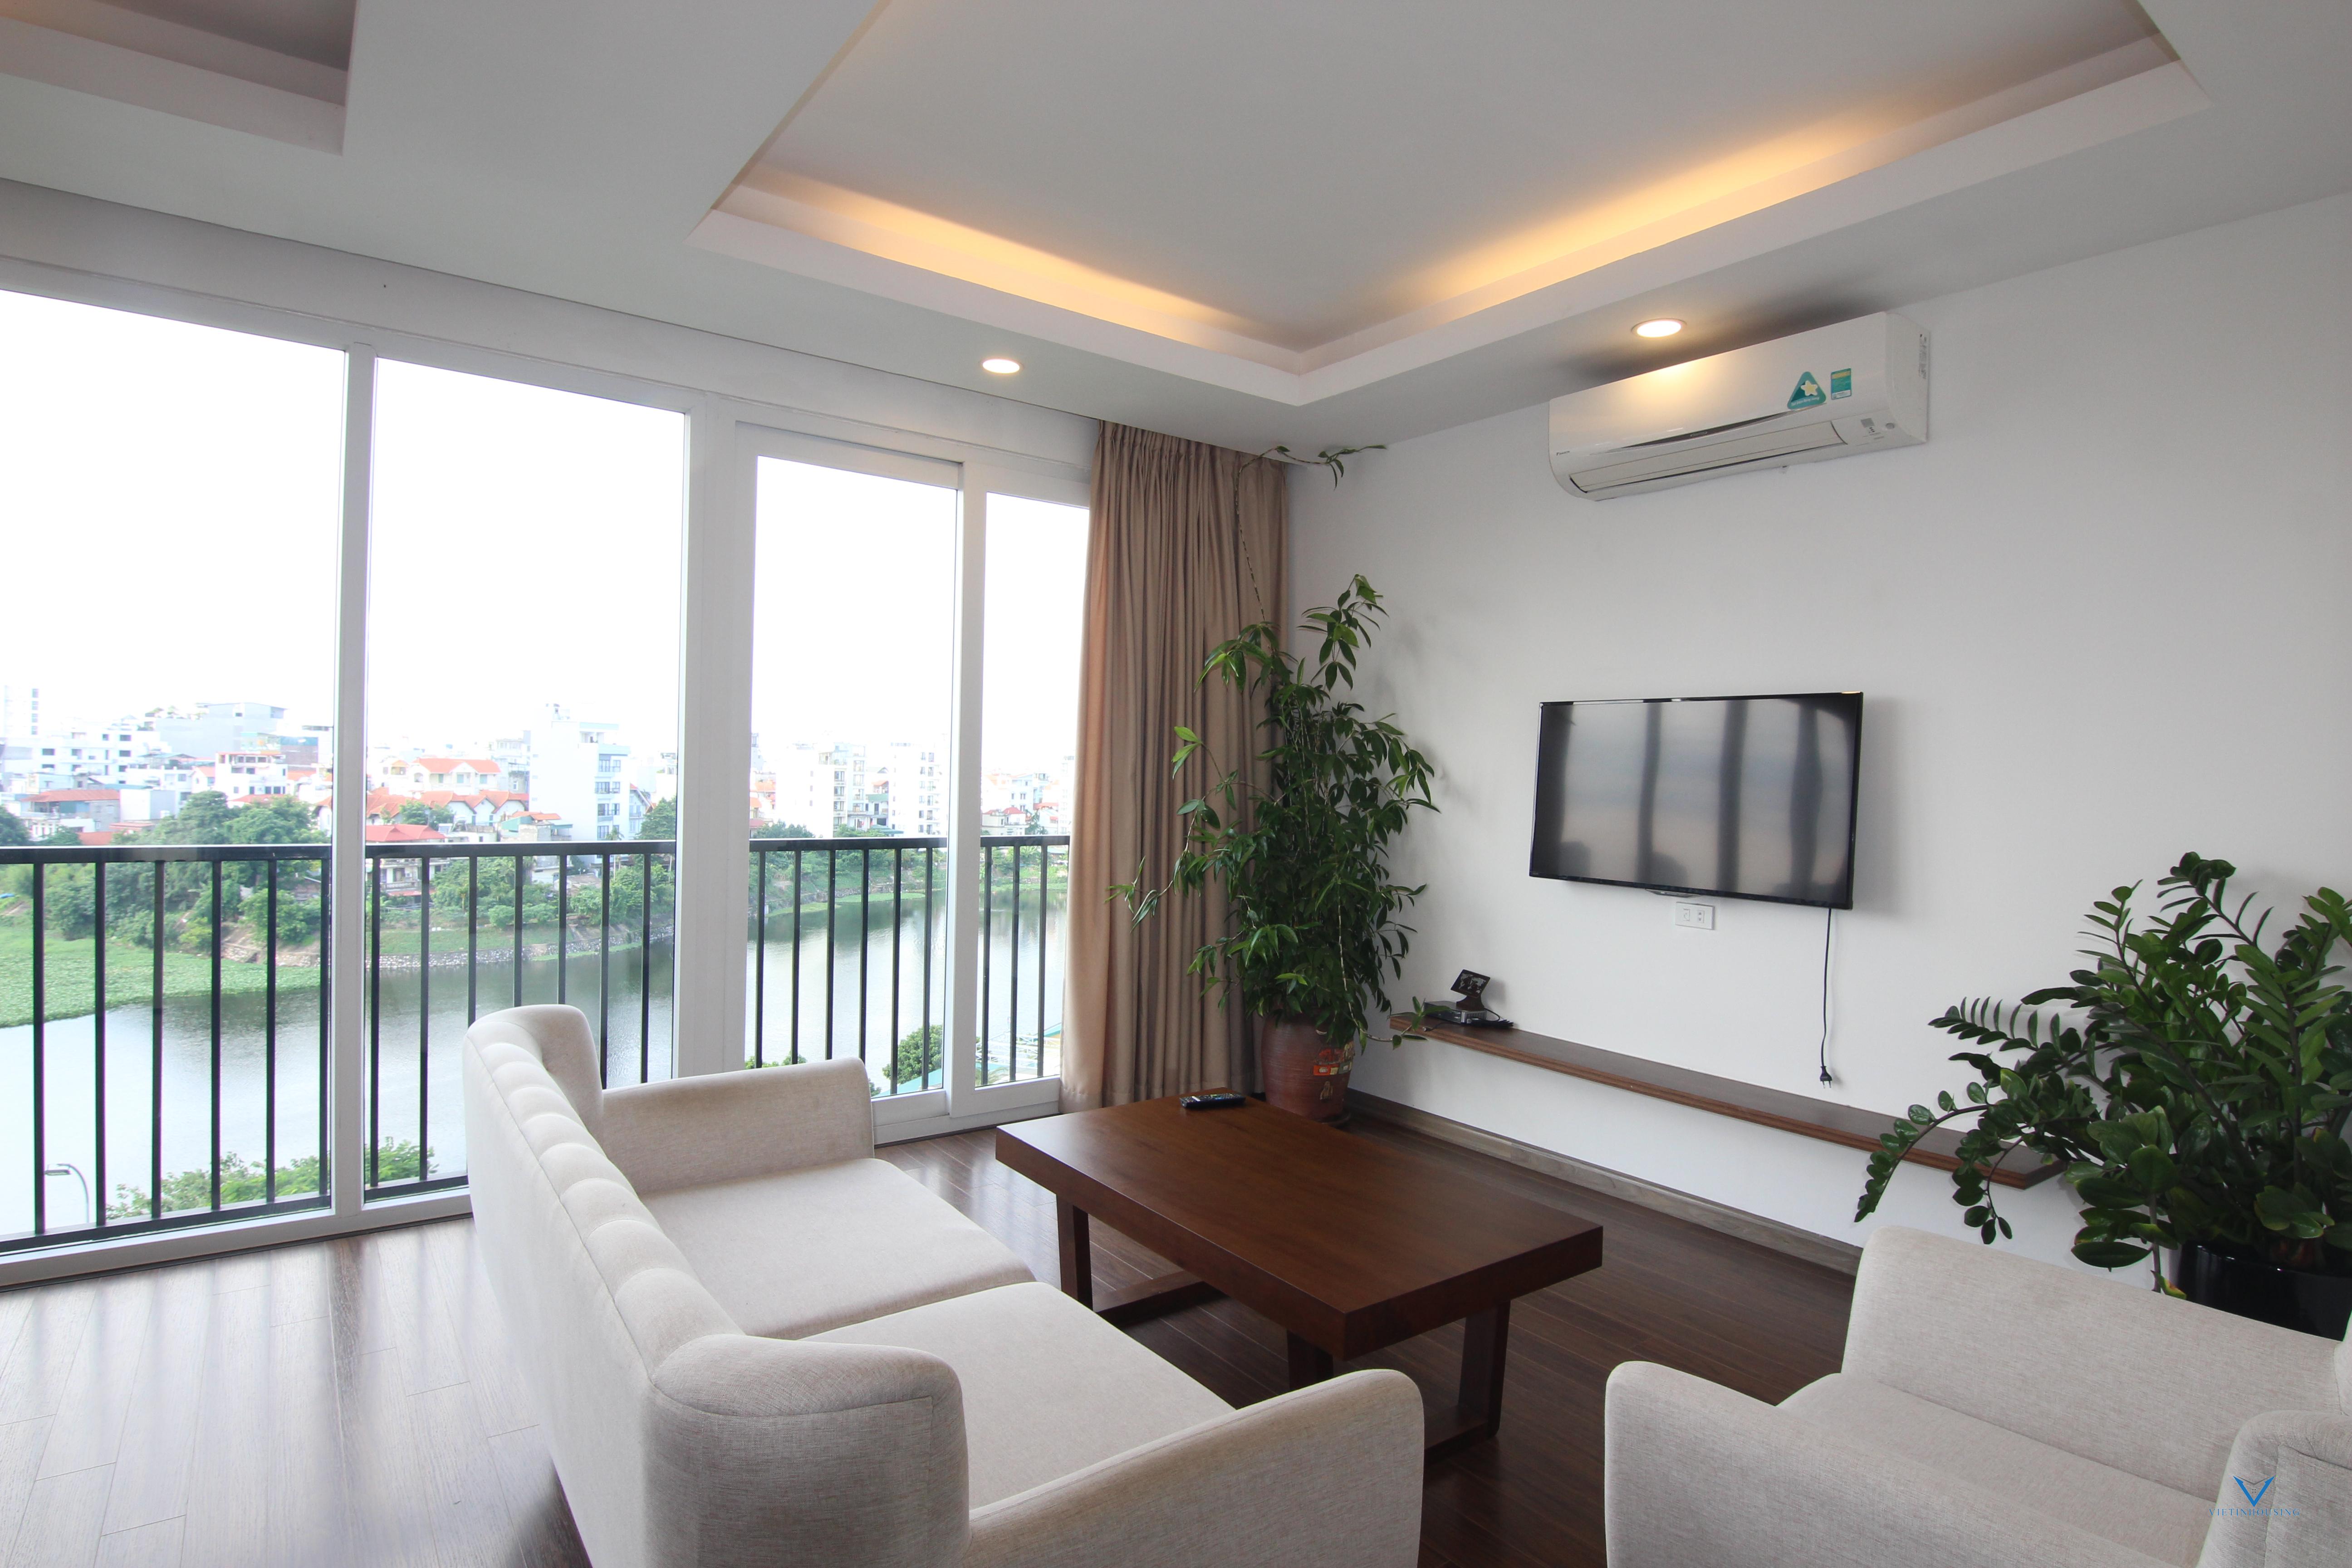 Lake view 2 bedroom apartment for rent in To ngoc van, Tay ho, Ha noi